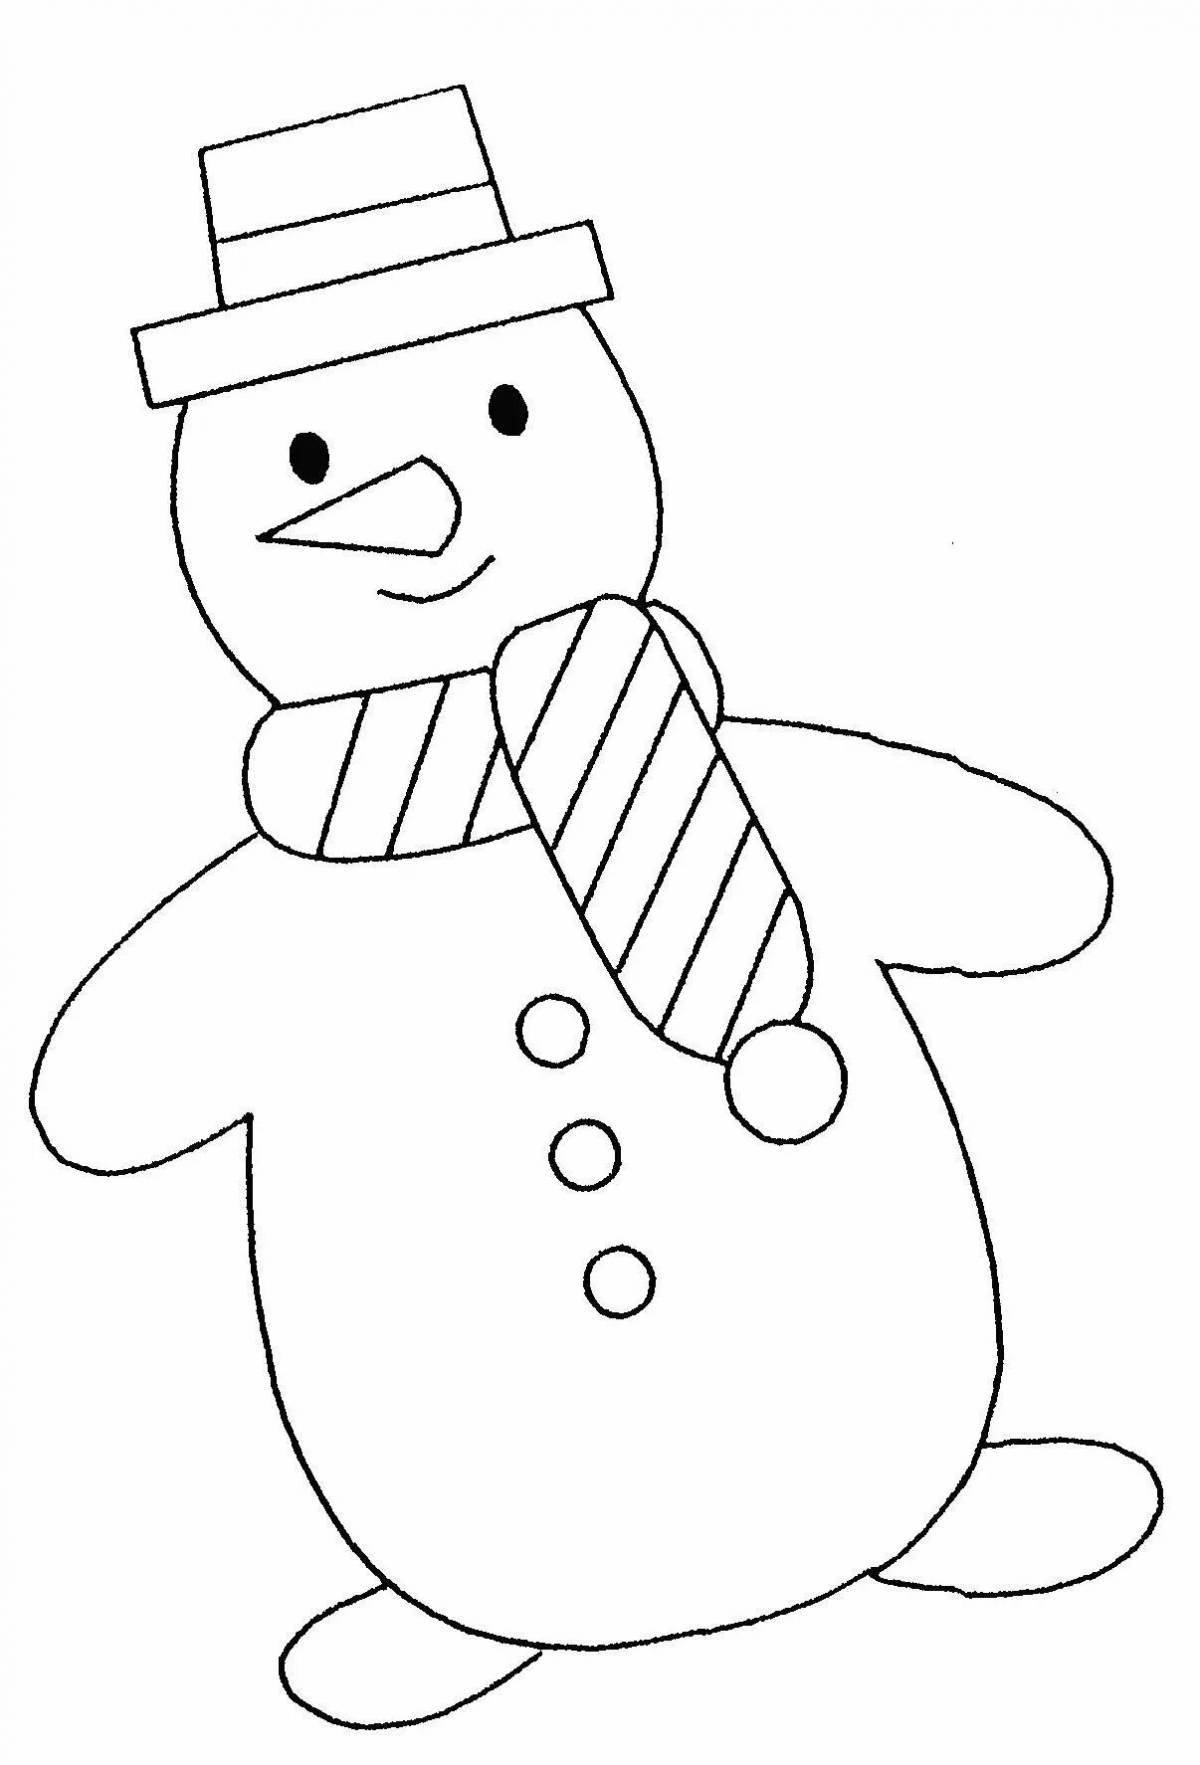 Fun mega snowman coloring page